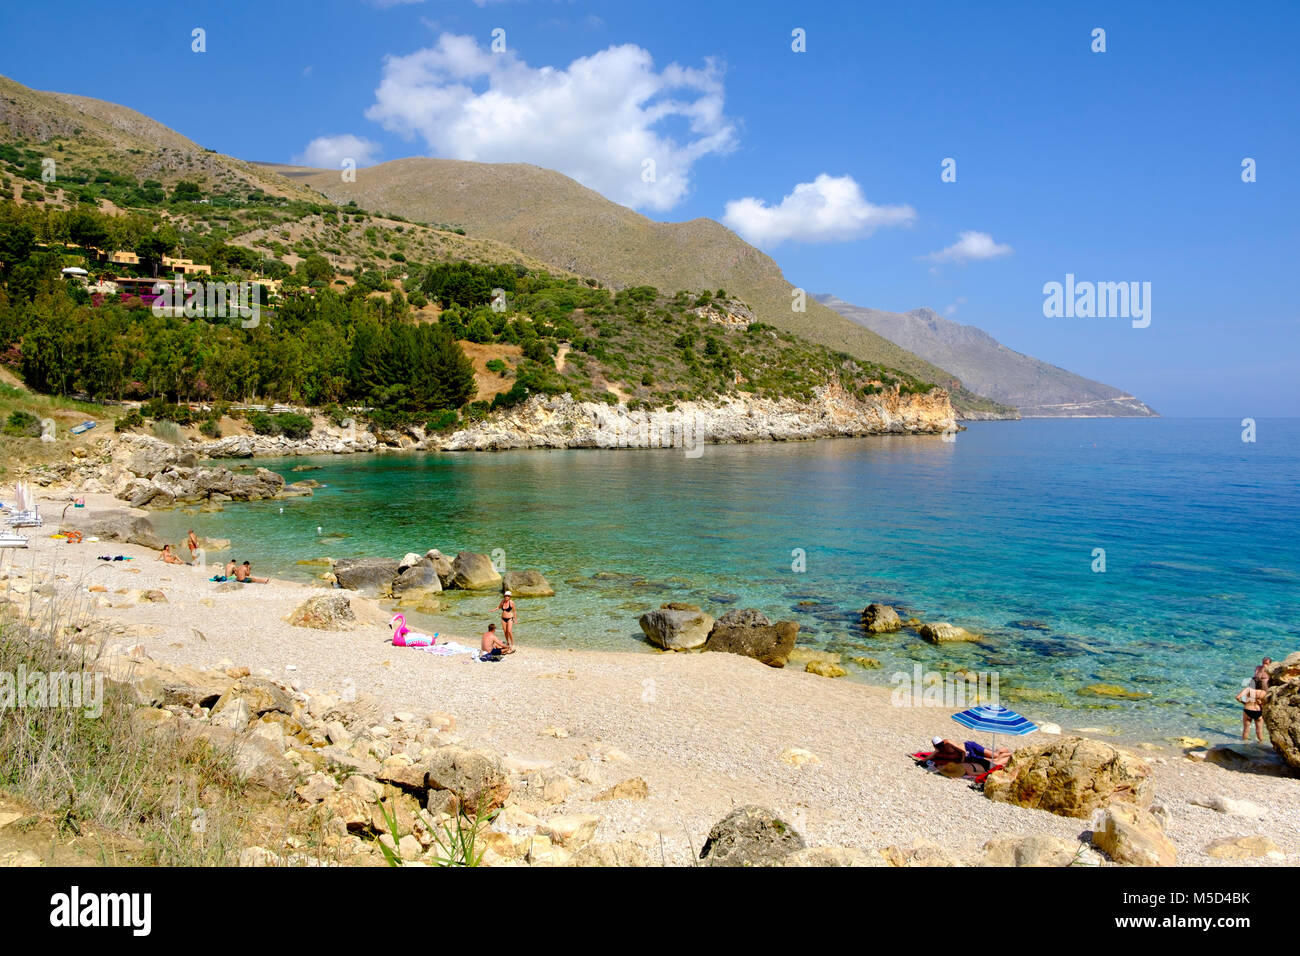 La baie de Cala Mazzo di Sciacca, Callamazzo beach, Zingaro, près de Trapani, Sicile, Italie Banque D'Images